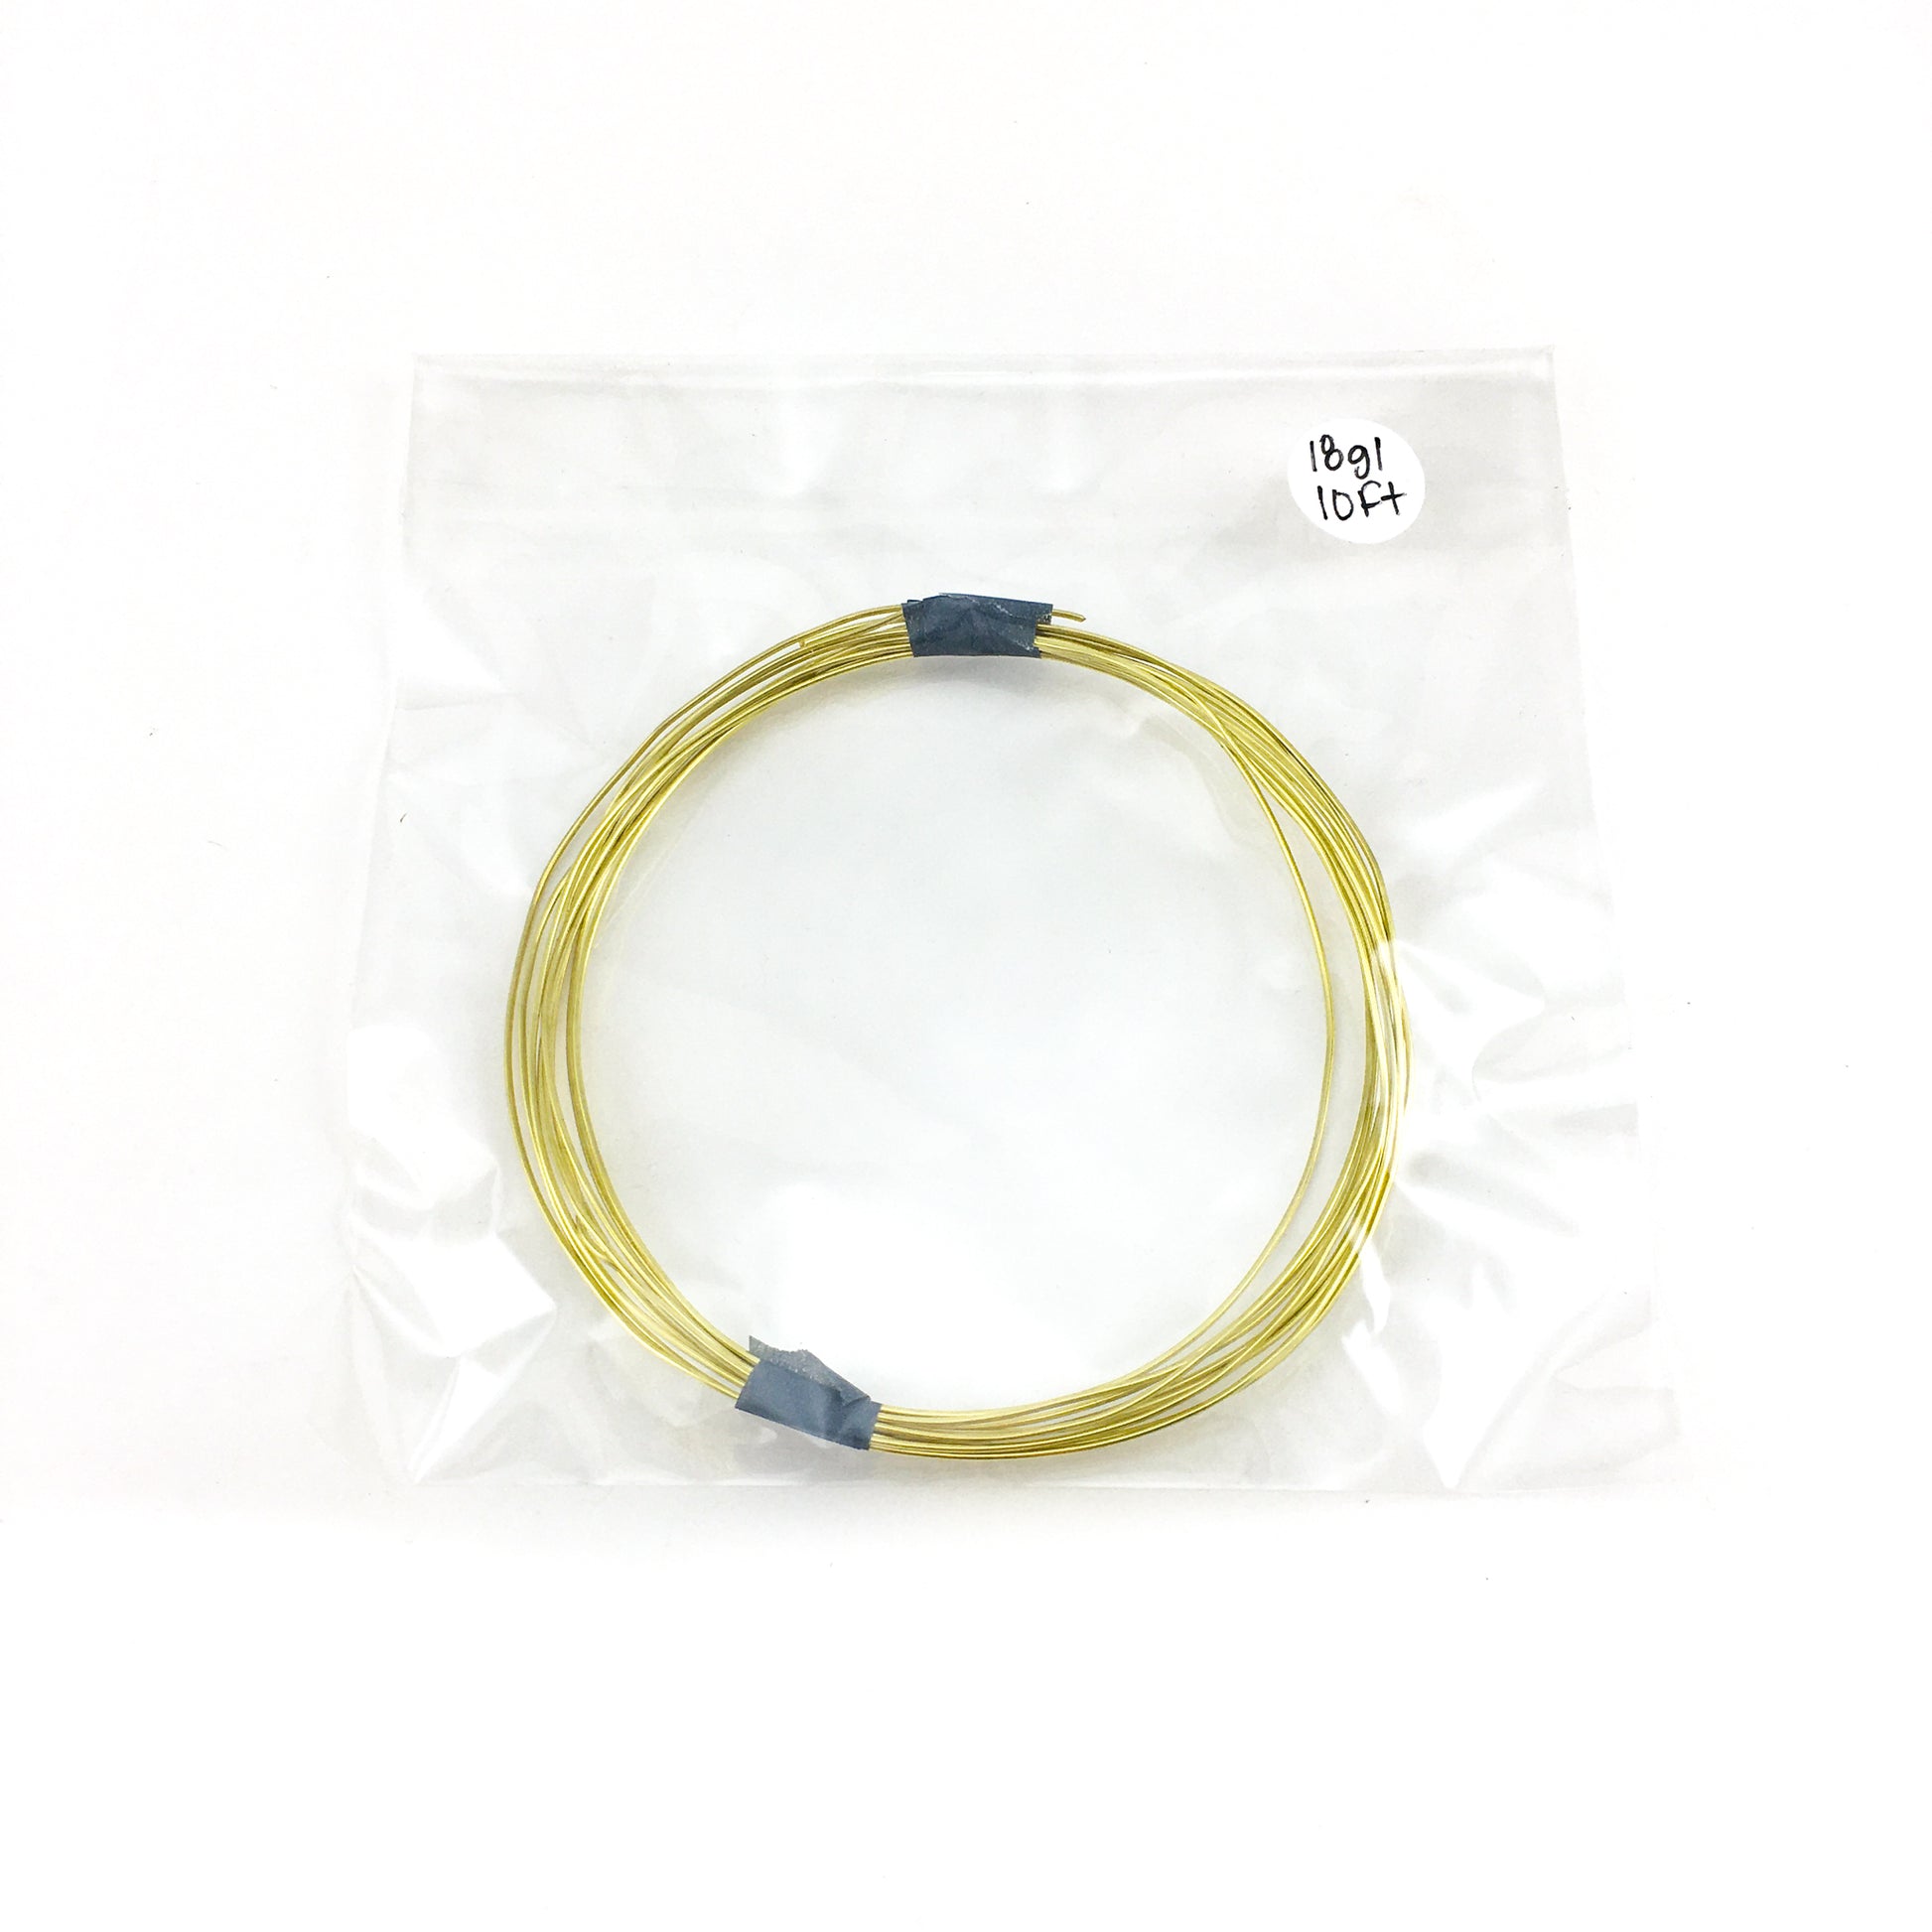 Round Brass Wire - Soft Temper a.k.a. Dead Soft - 10 ft. - 18g by Contenti - K. A. Artist Shop